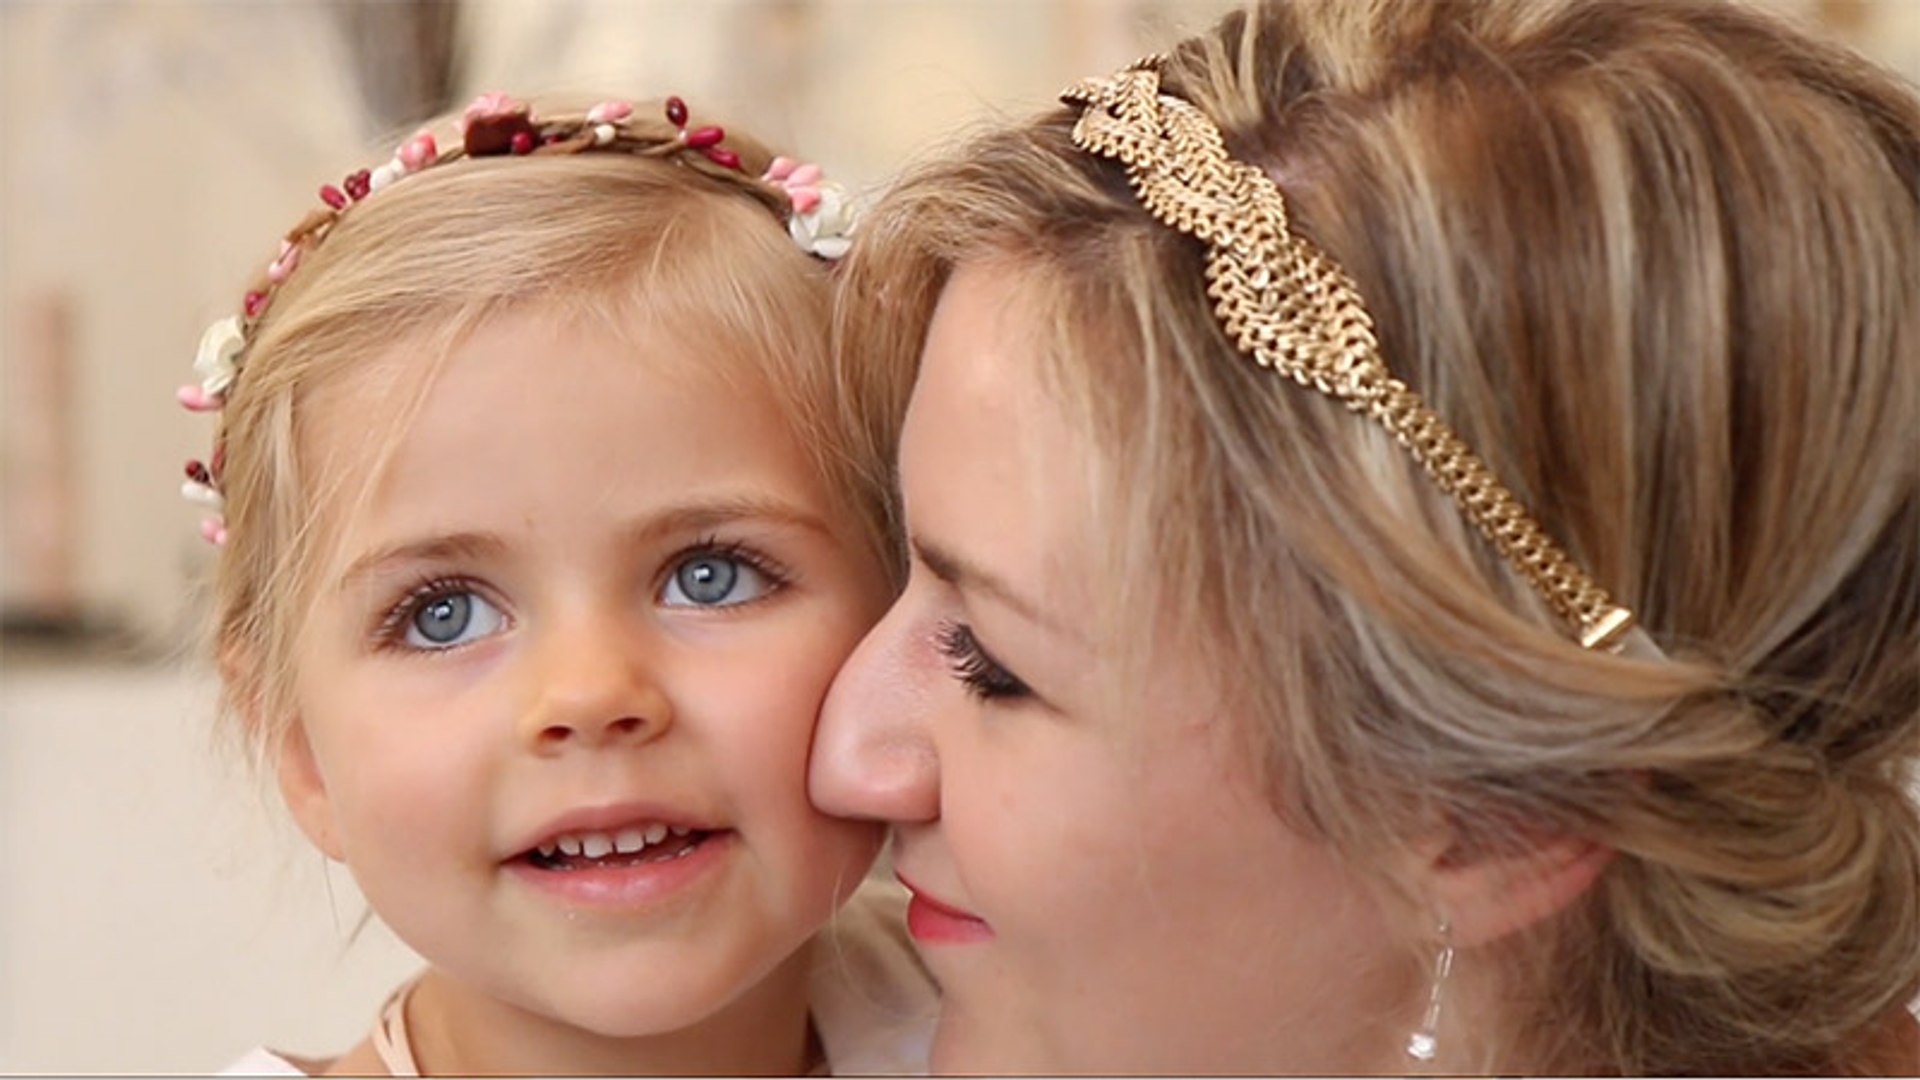 Tuto headband mère-fille : à chacune sa coiffure bohème - Vidéo Dailymotion